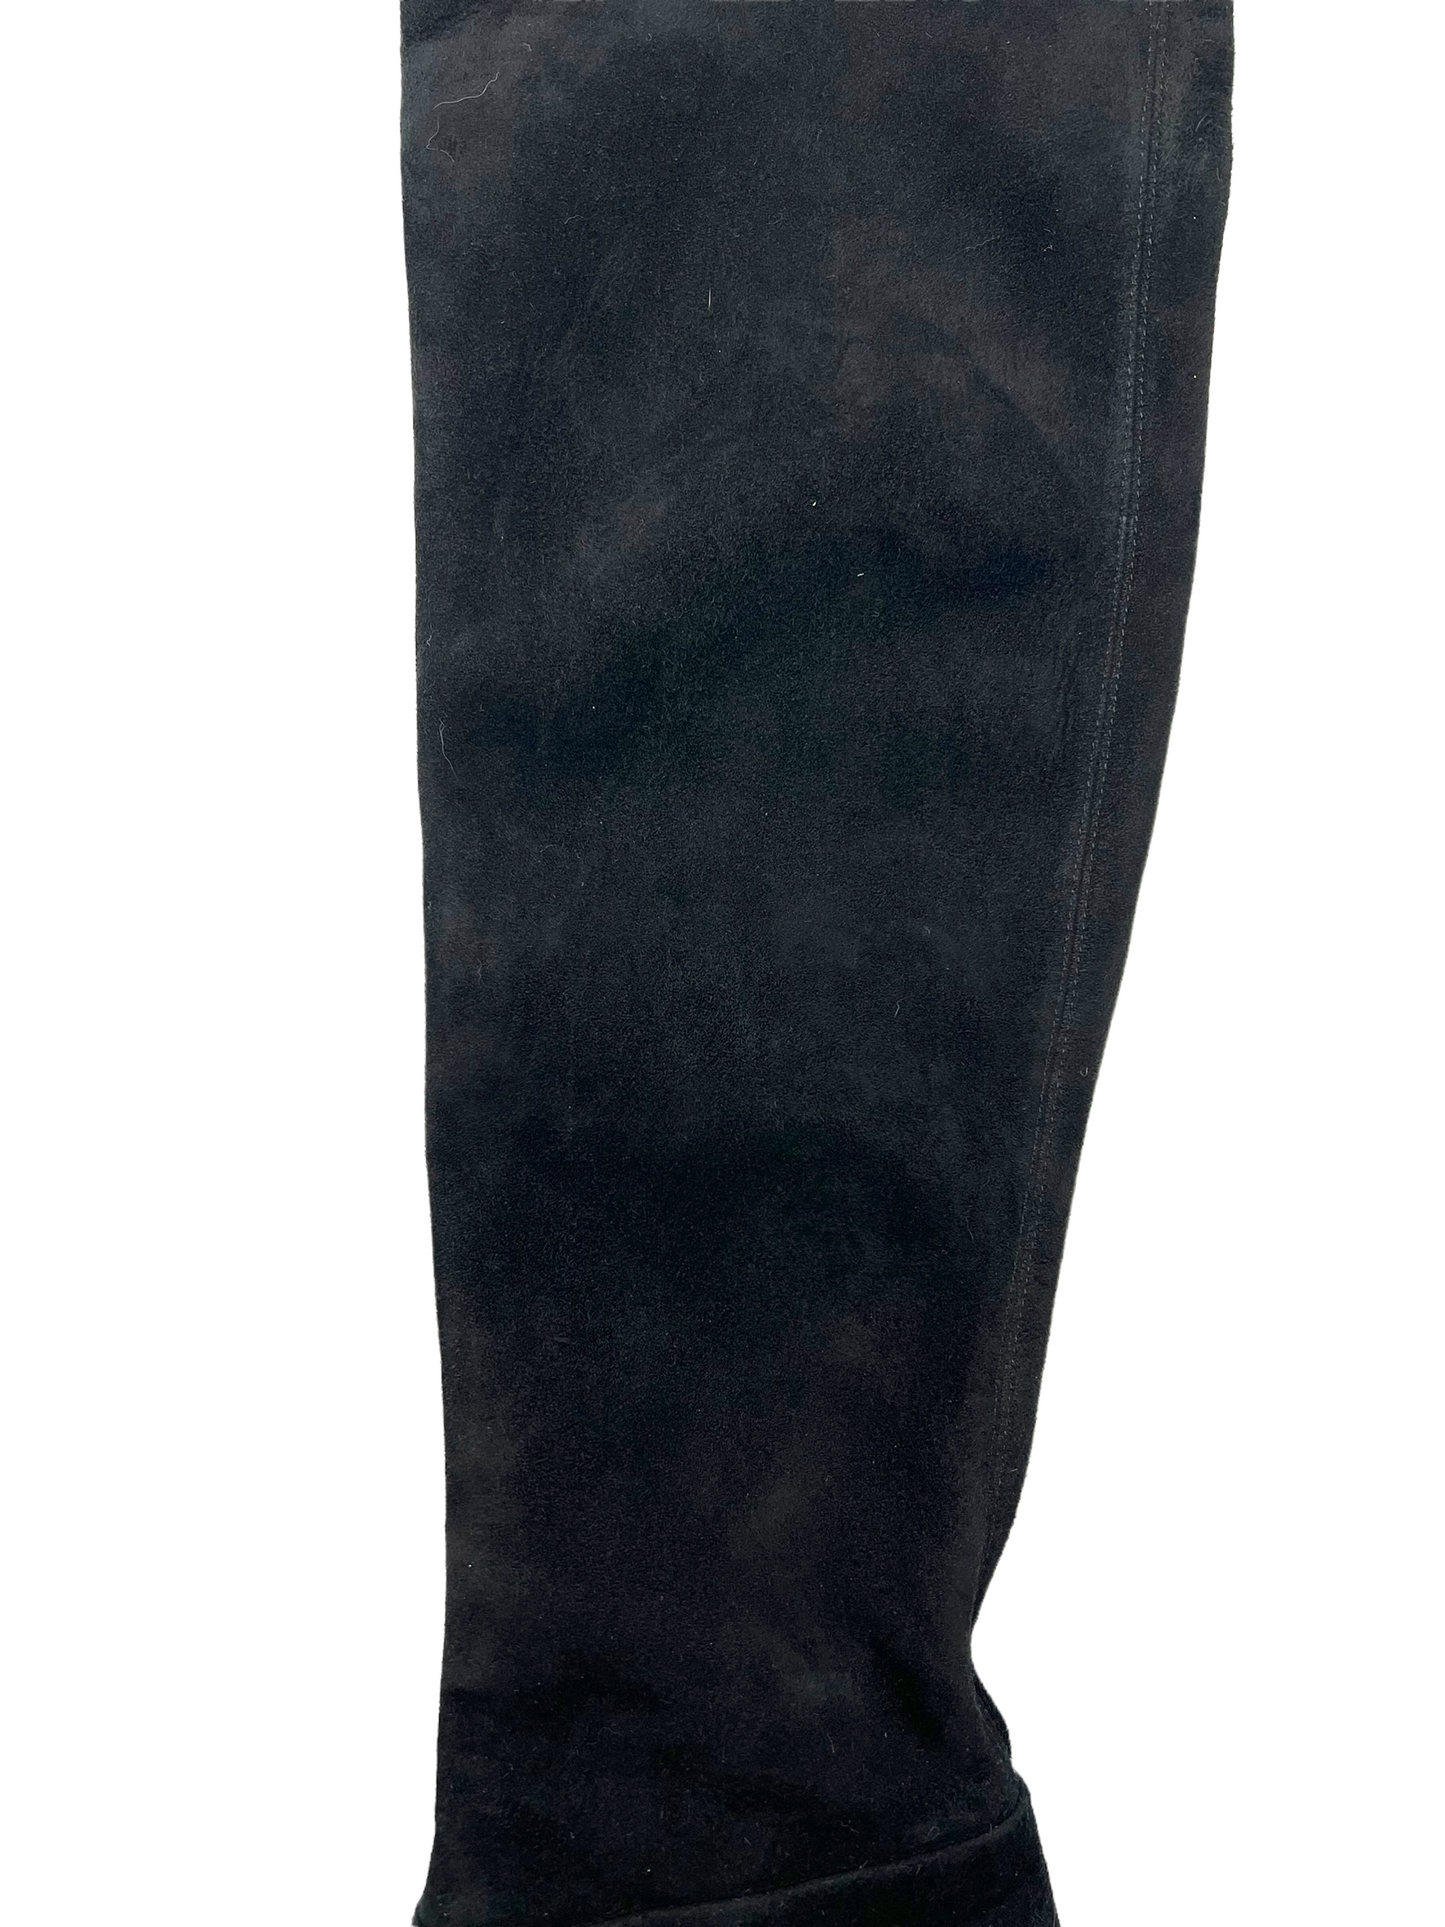 Miu Miu Black Suede Thigh High Size 38 Boots